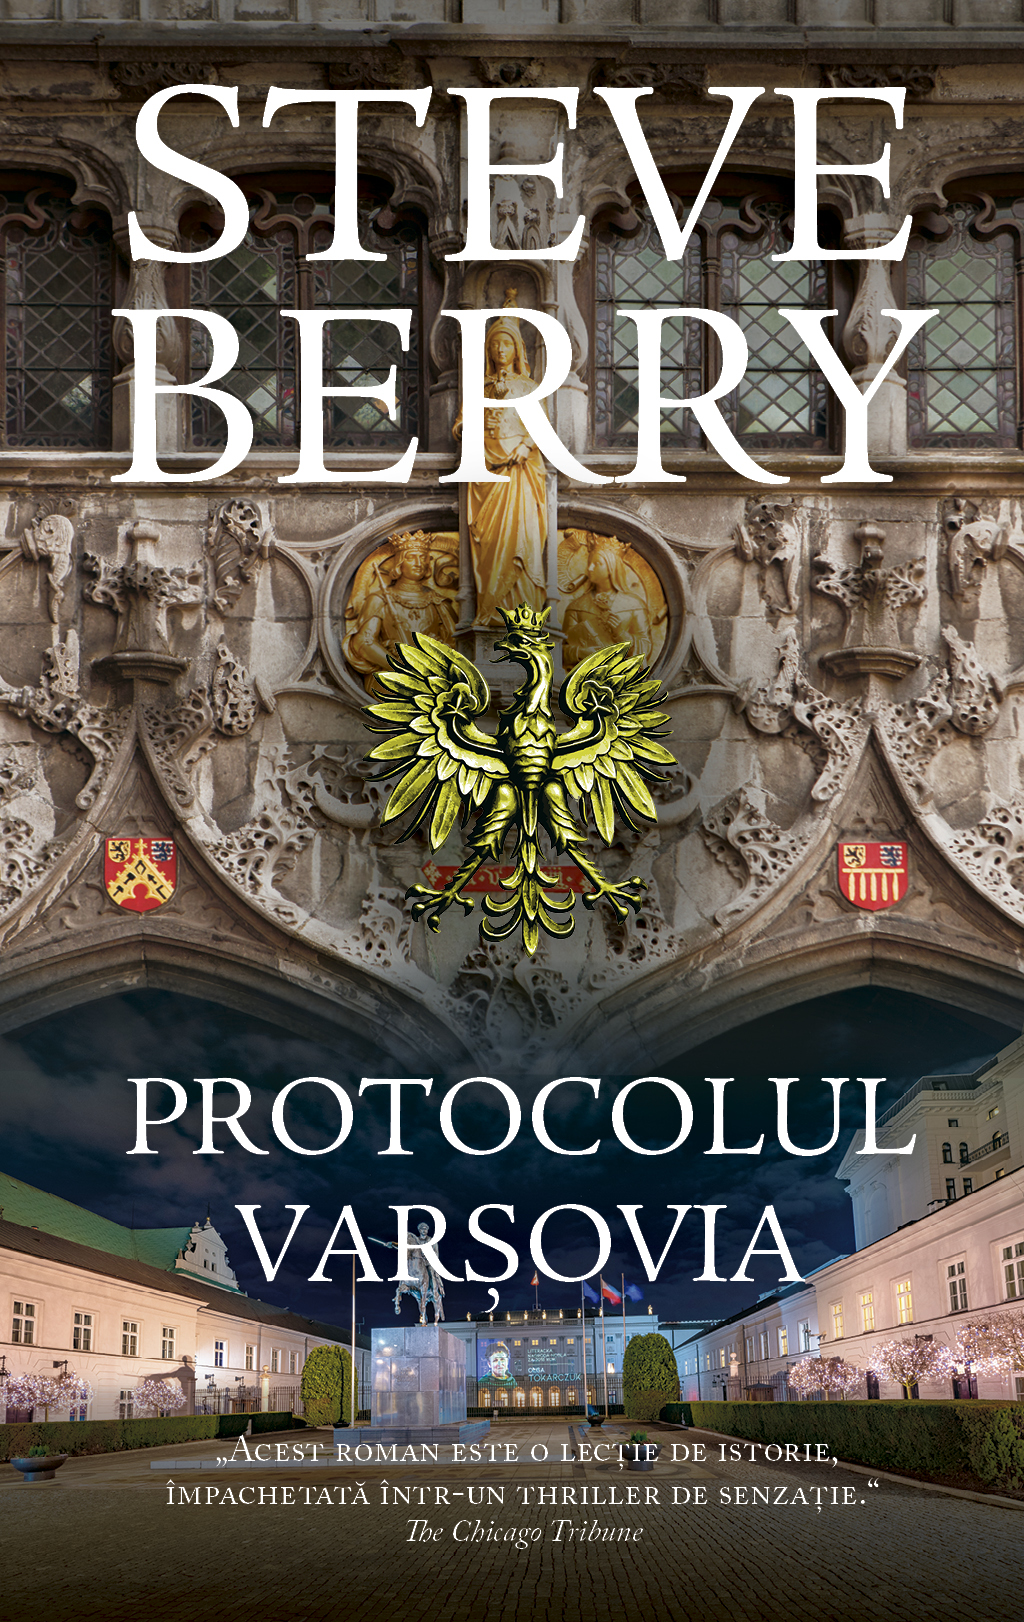 Protocolul Varsovia | Steve Berry Berry imagine 2022